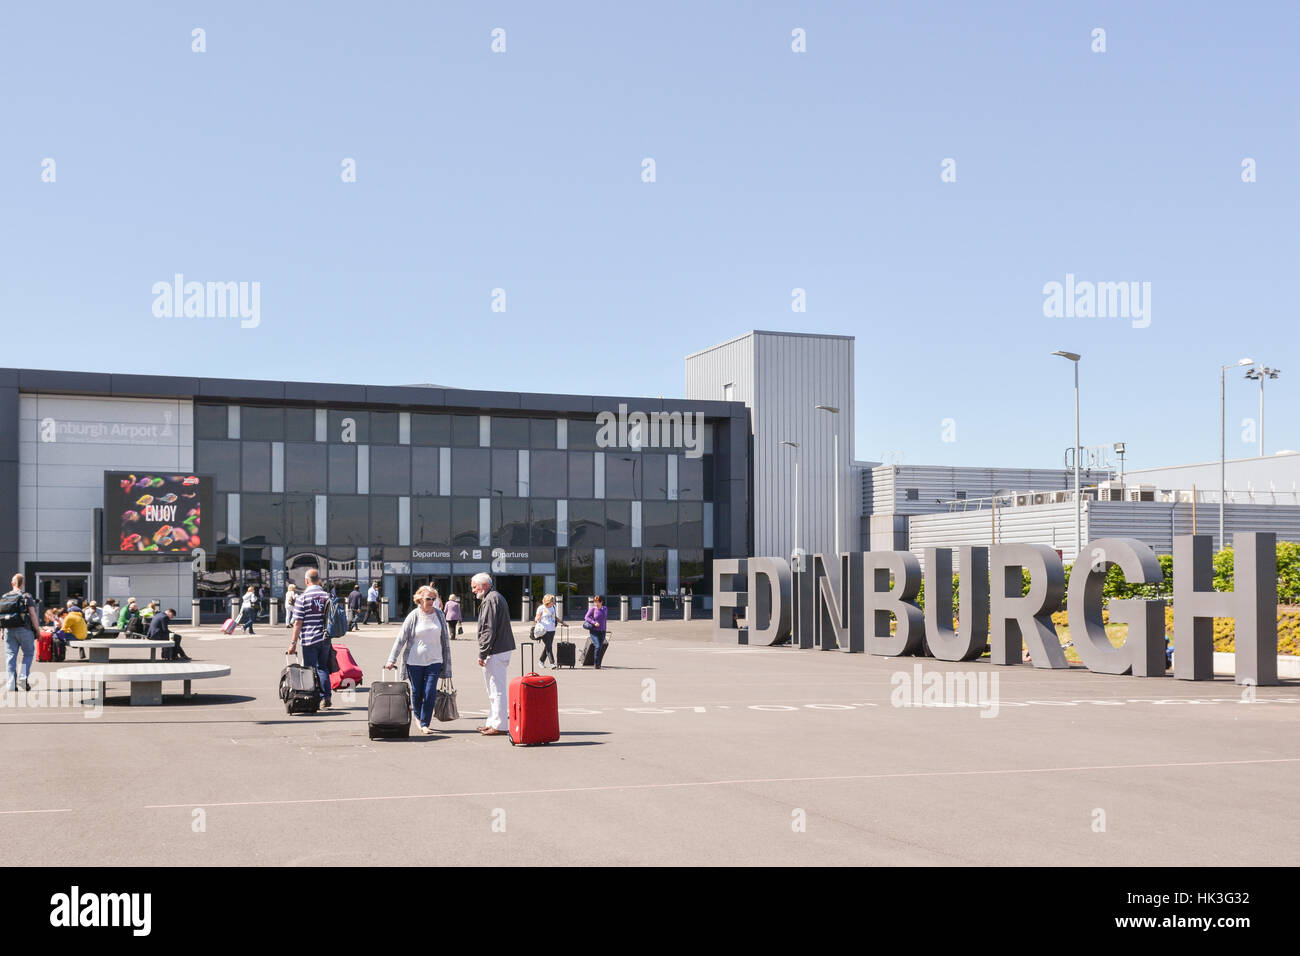 Edinburgh airport, Edinburgh, Scotland, UK Stock Photo